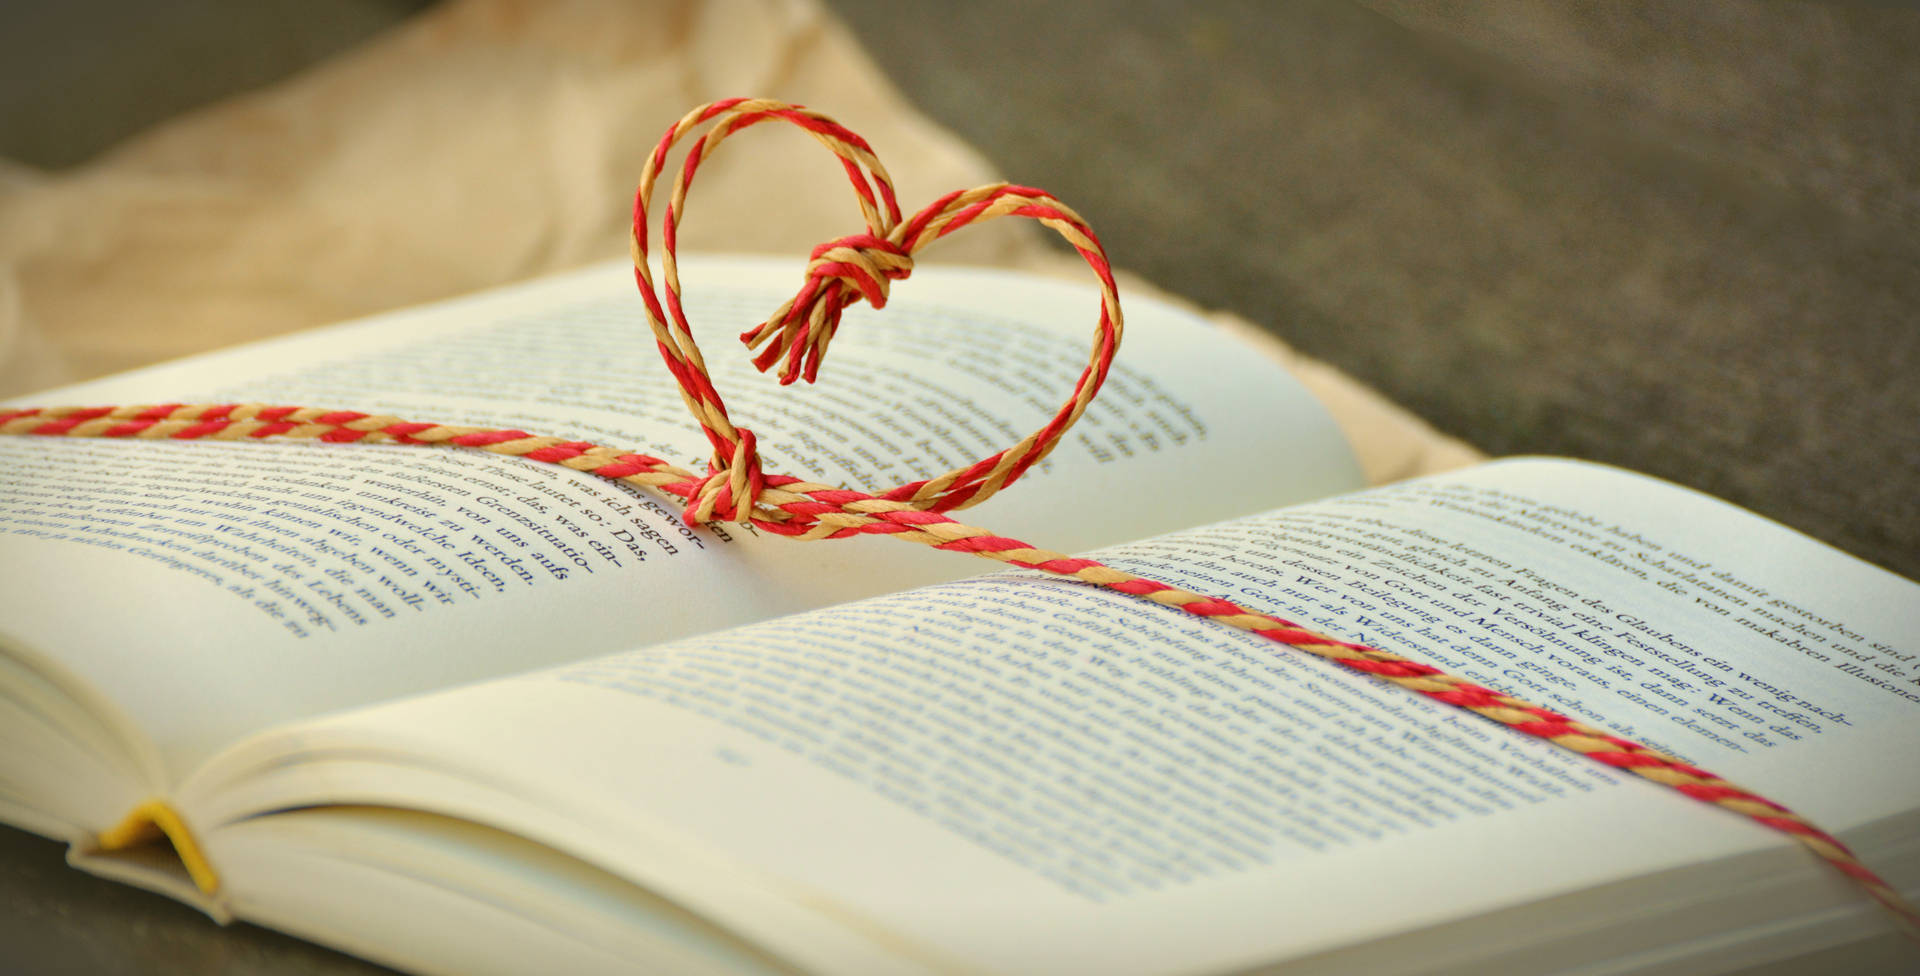 Heart shaped thread knot on a book wallpaper